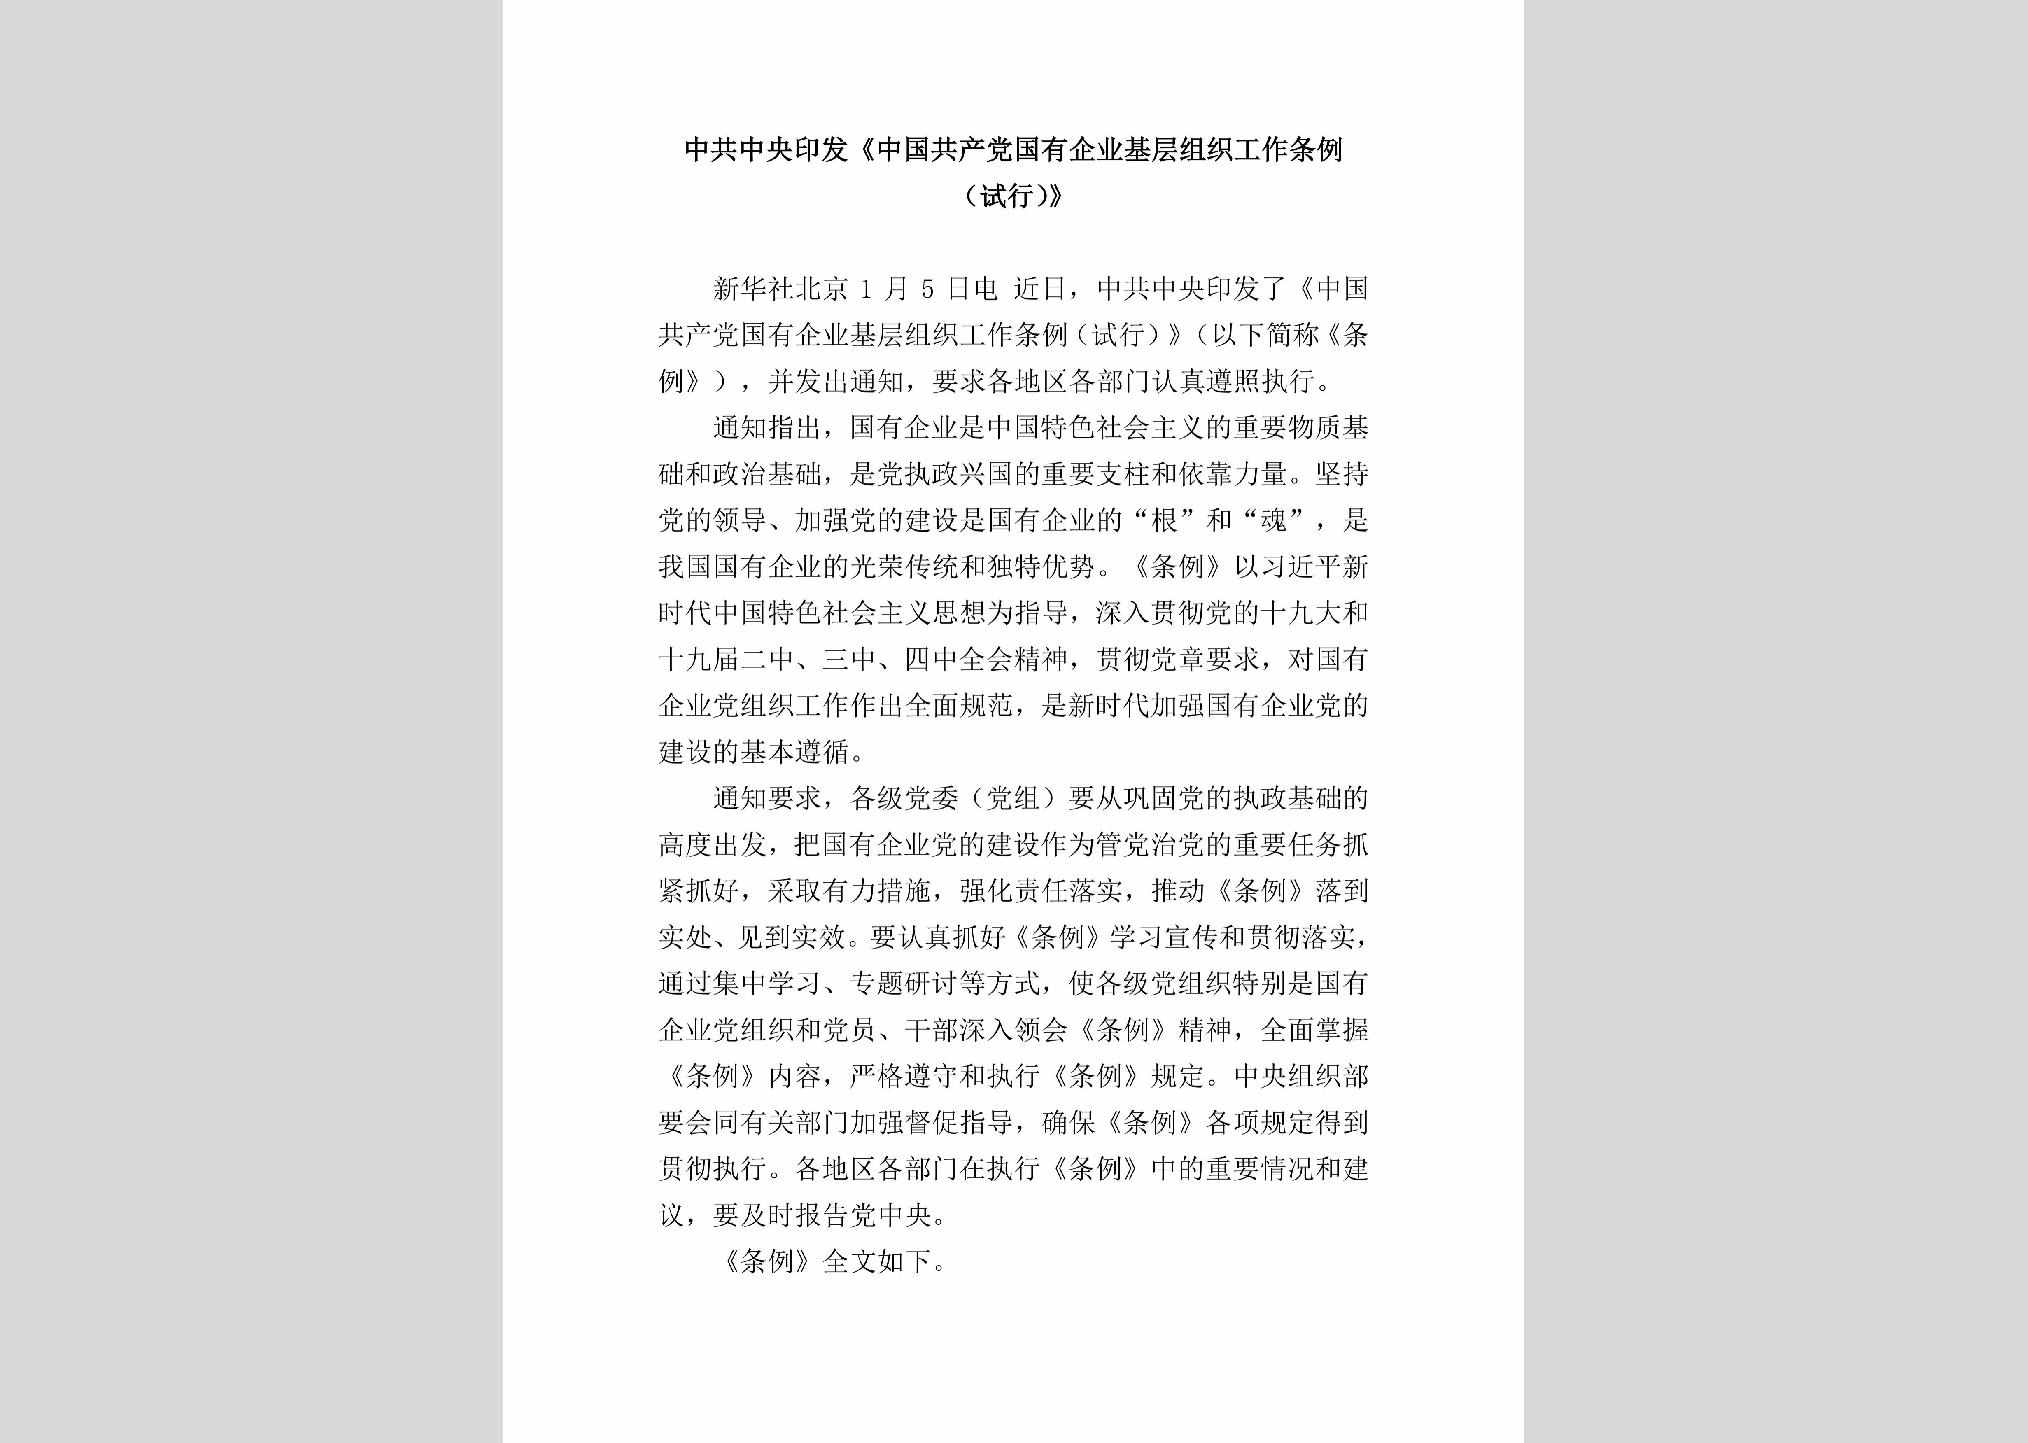 GYQYJCZZ：中共中央印发《中国共产党国有企业基层组织工作条例（试行）》